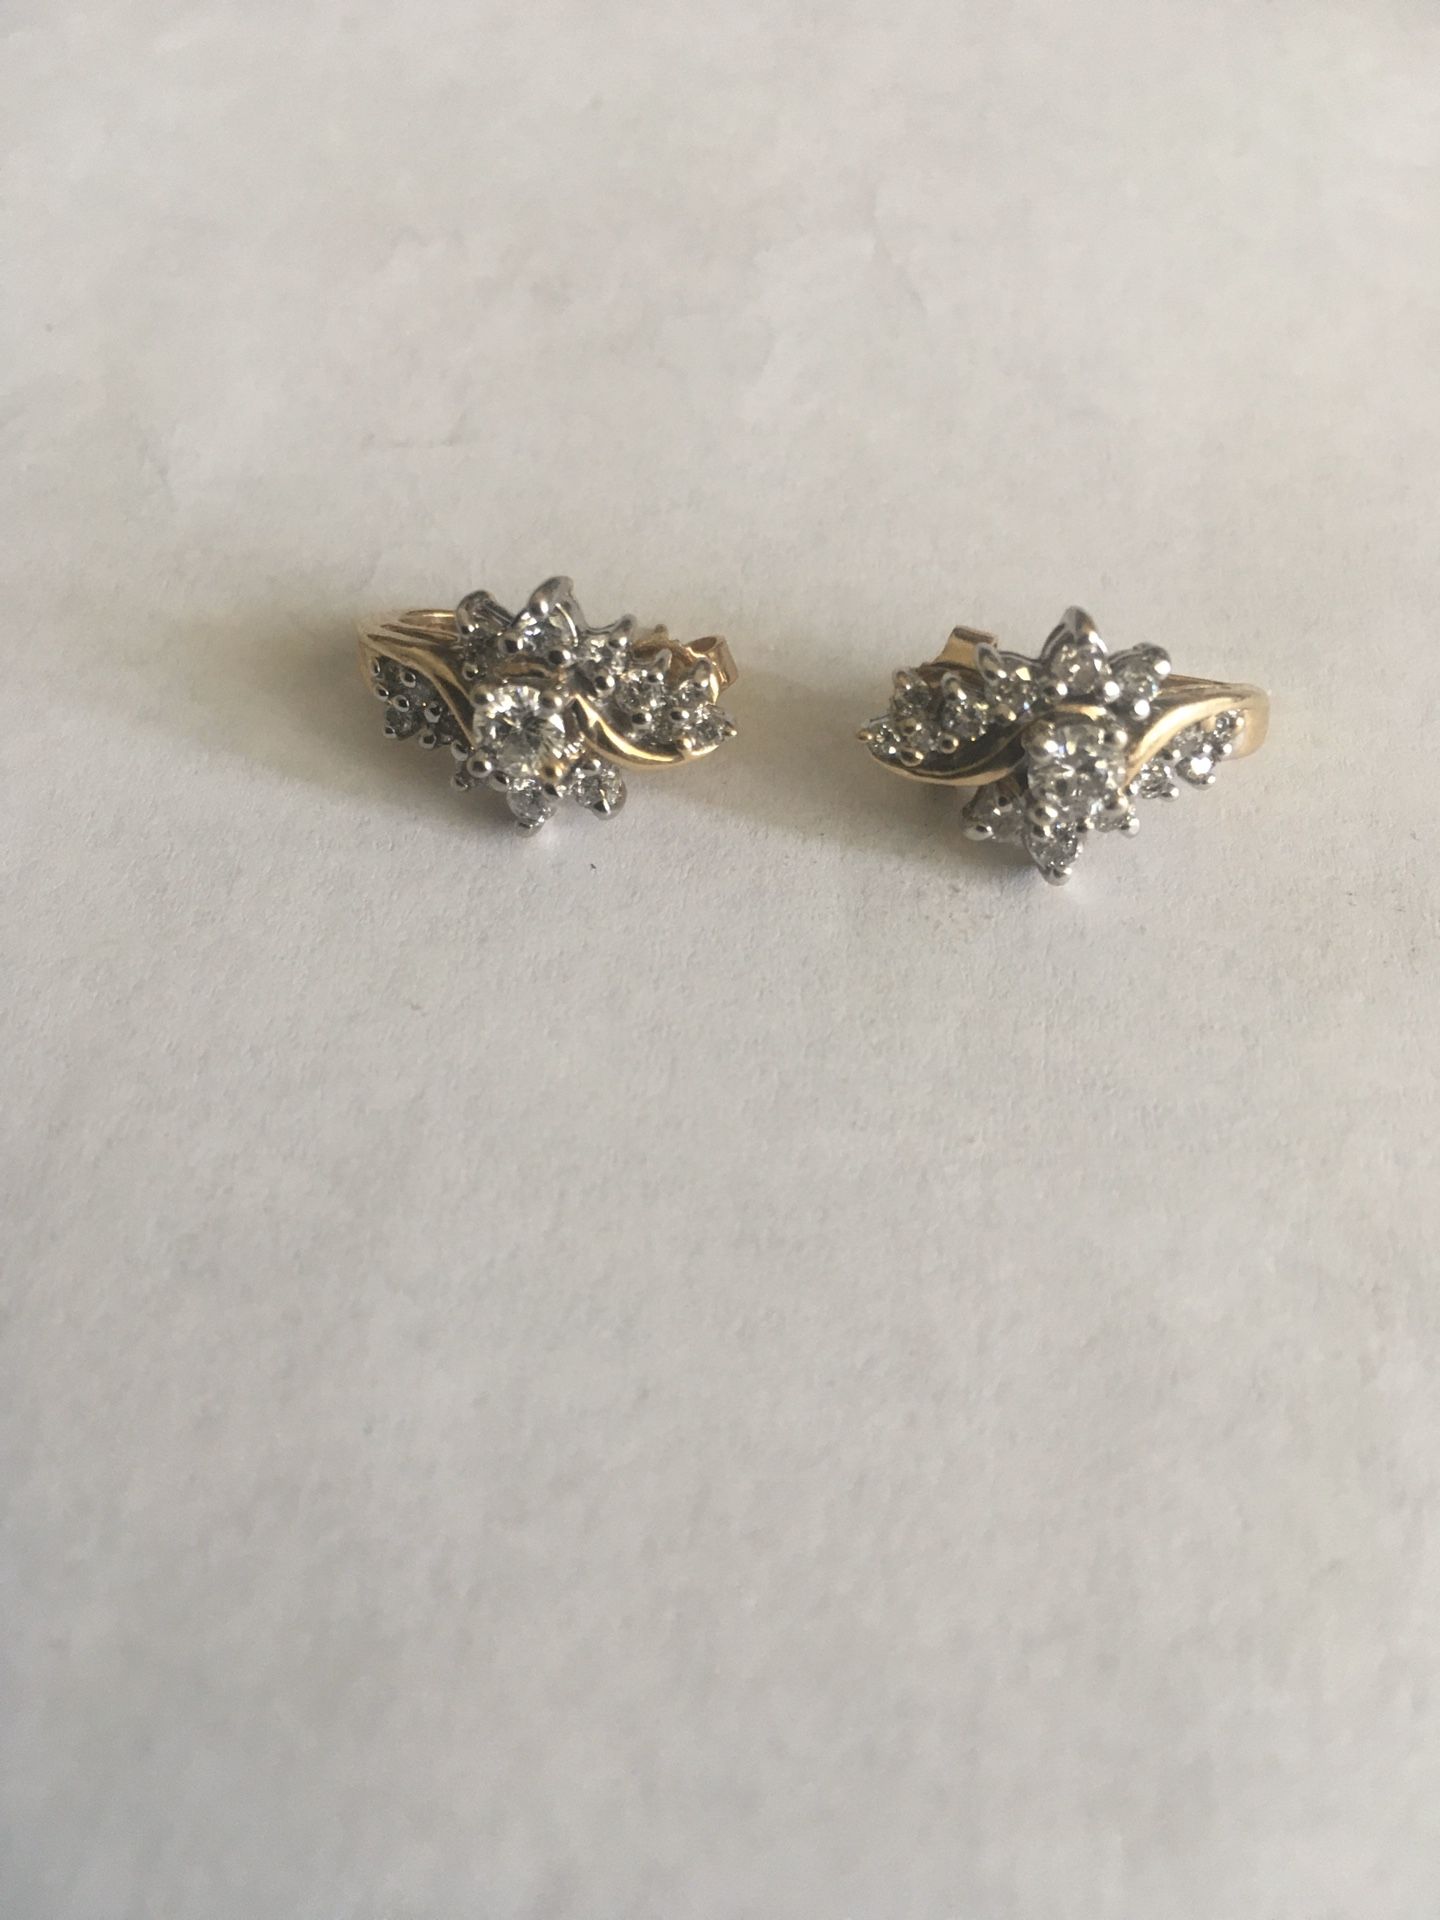 14K Yellow Gold 1.1 Carats Diamonds Cluster Earrings . Retail $1900